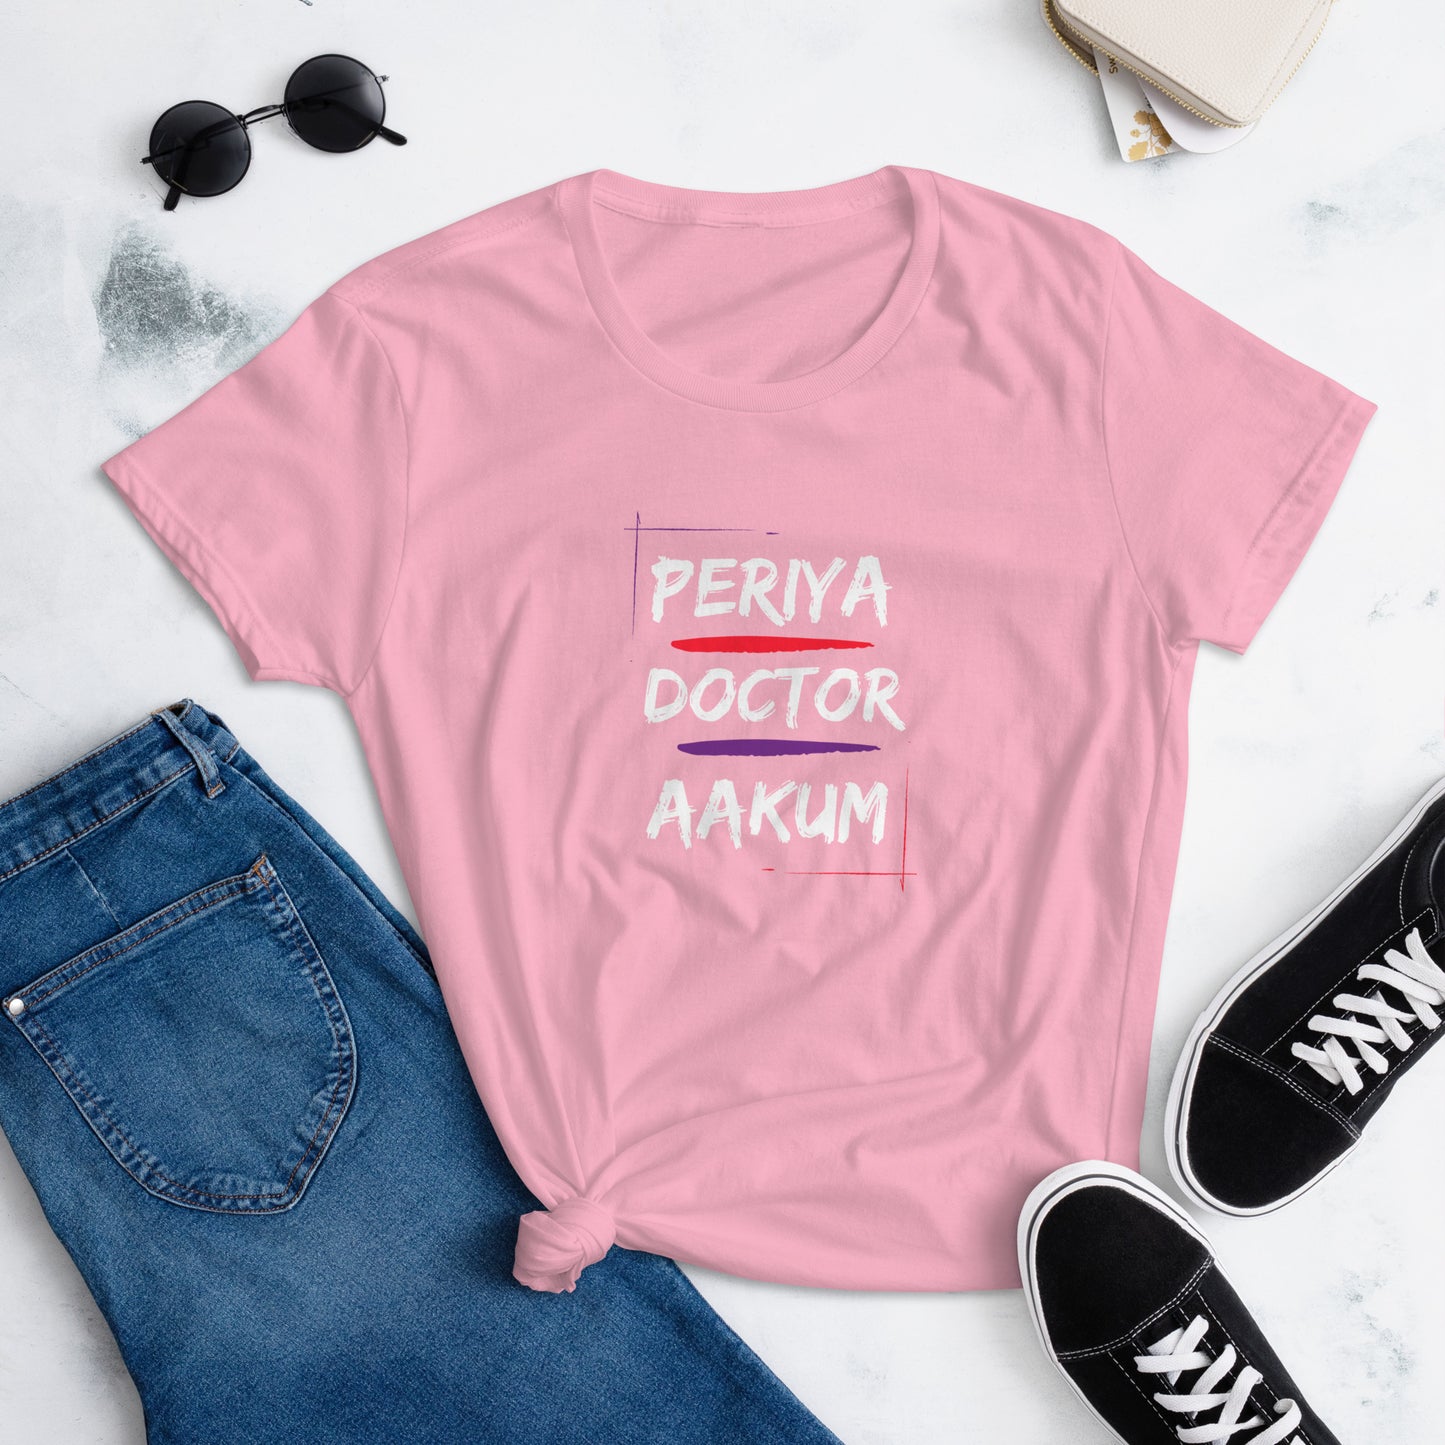 Periya Doctor aakum Women's short sleeve t-shirt